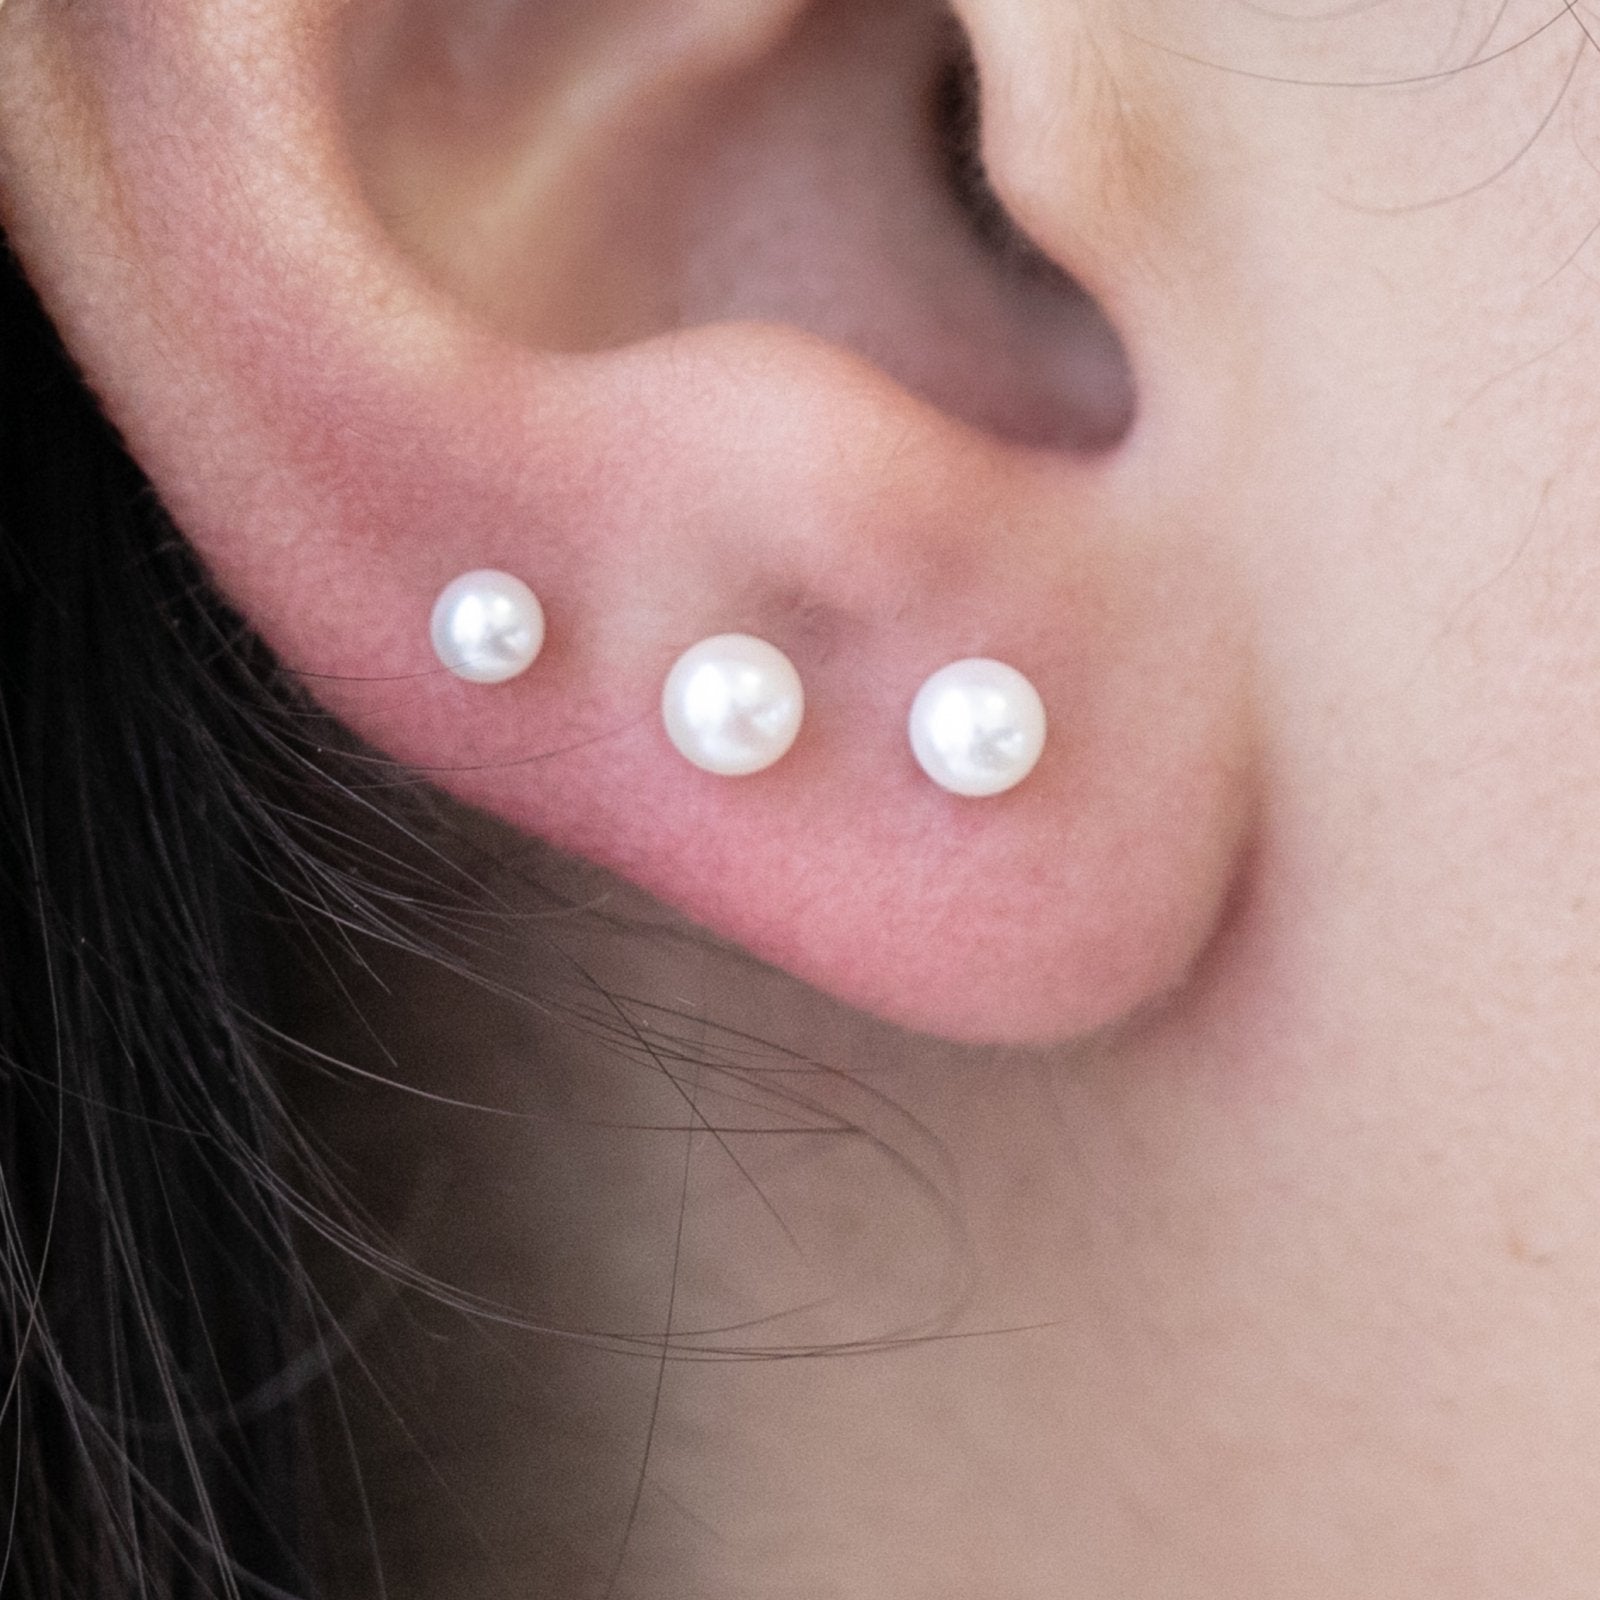 Pearl Flat Back Stud Earring Earrings Estella Collection #product_description# 18327 14k Birthstone Earrings #tag4# #tag5# #tag6# #tag7# #tag8# #tag9# #tag10# 2.5MM 5MM